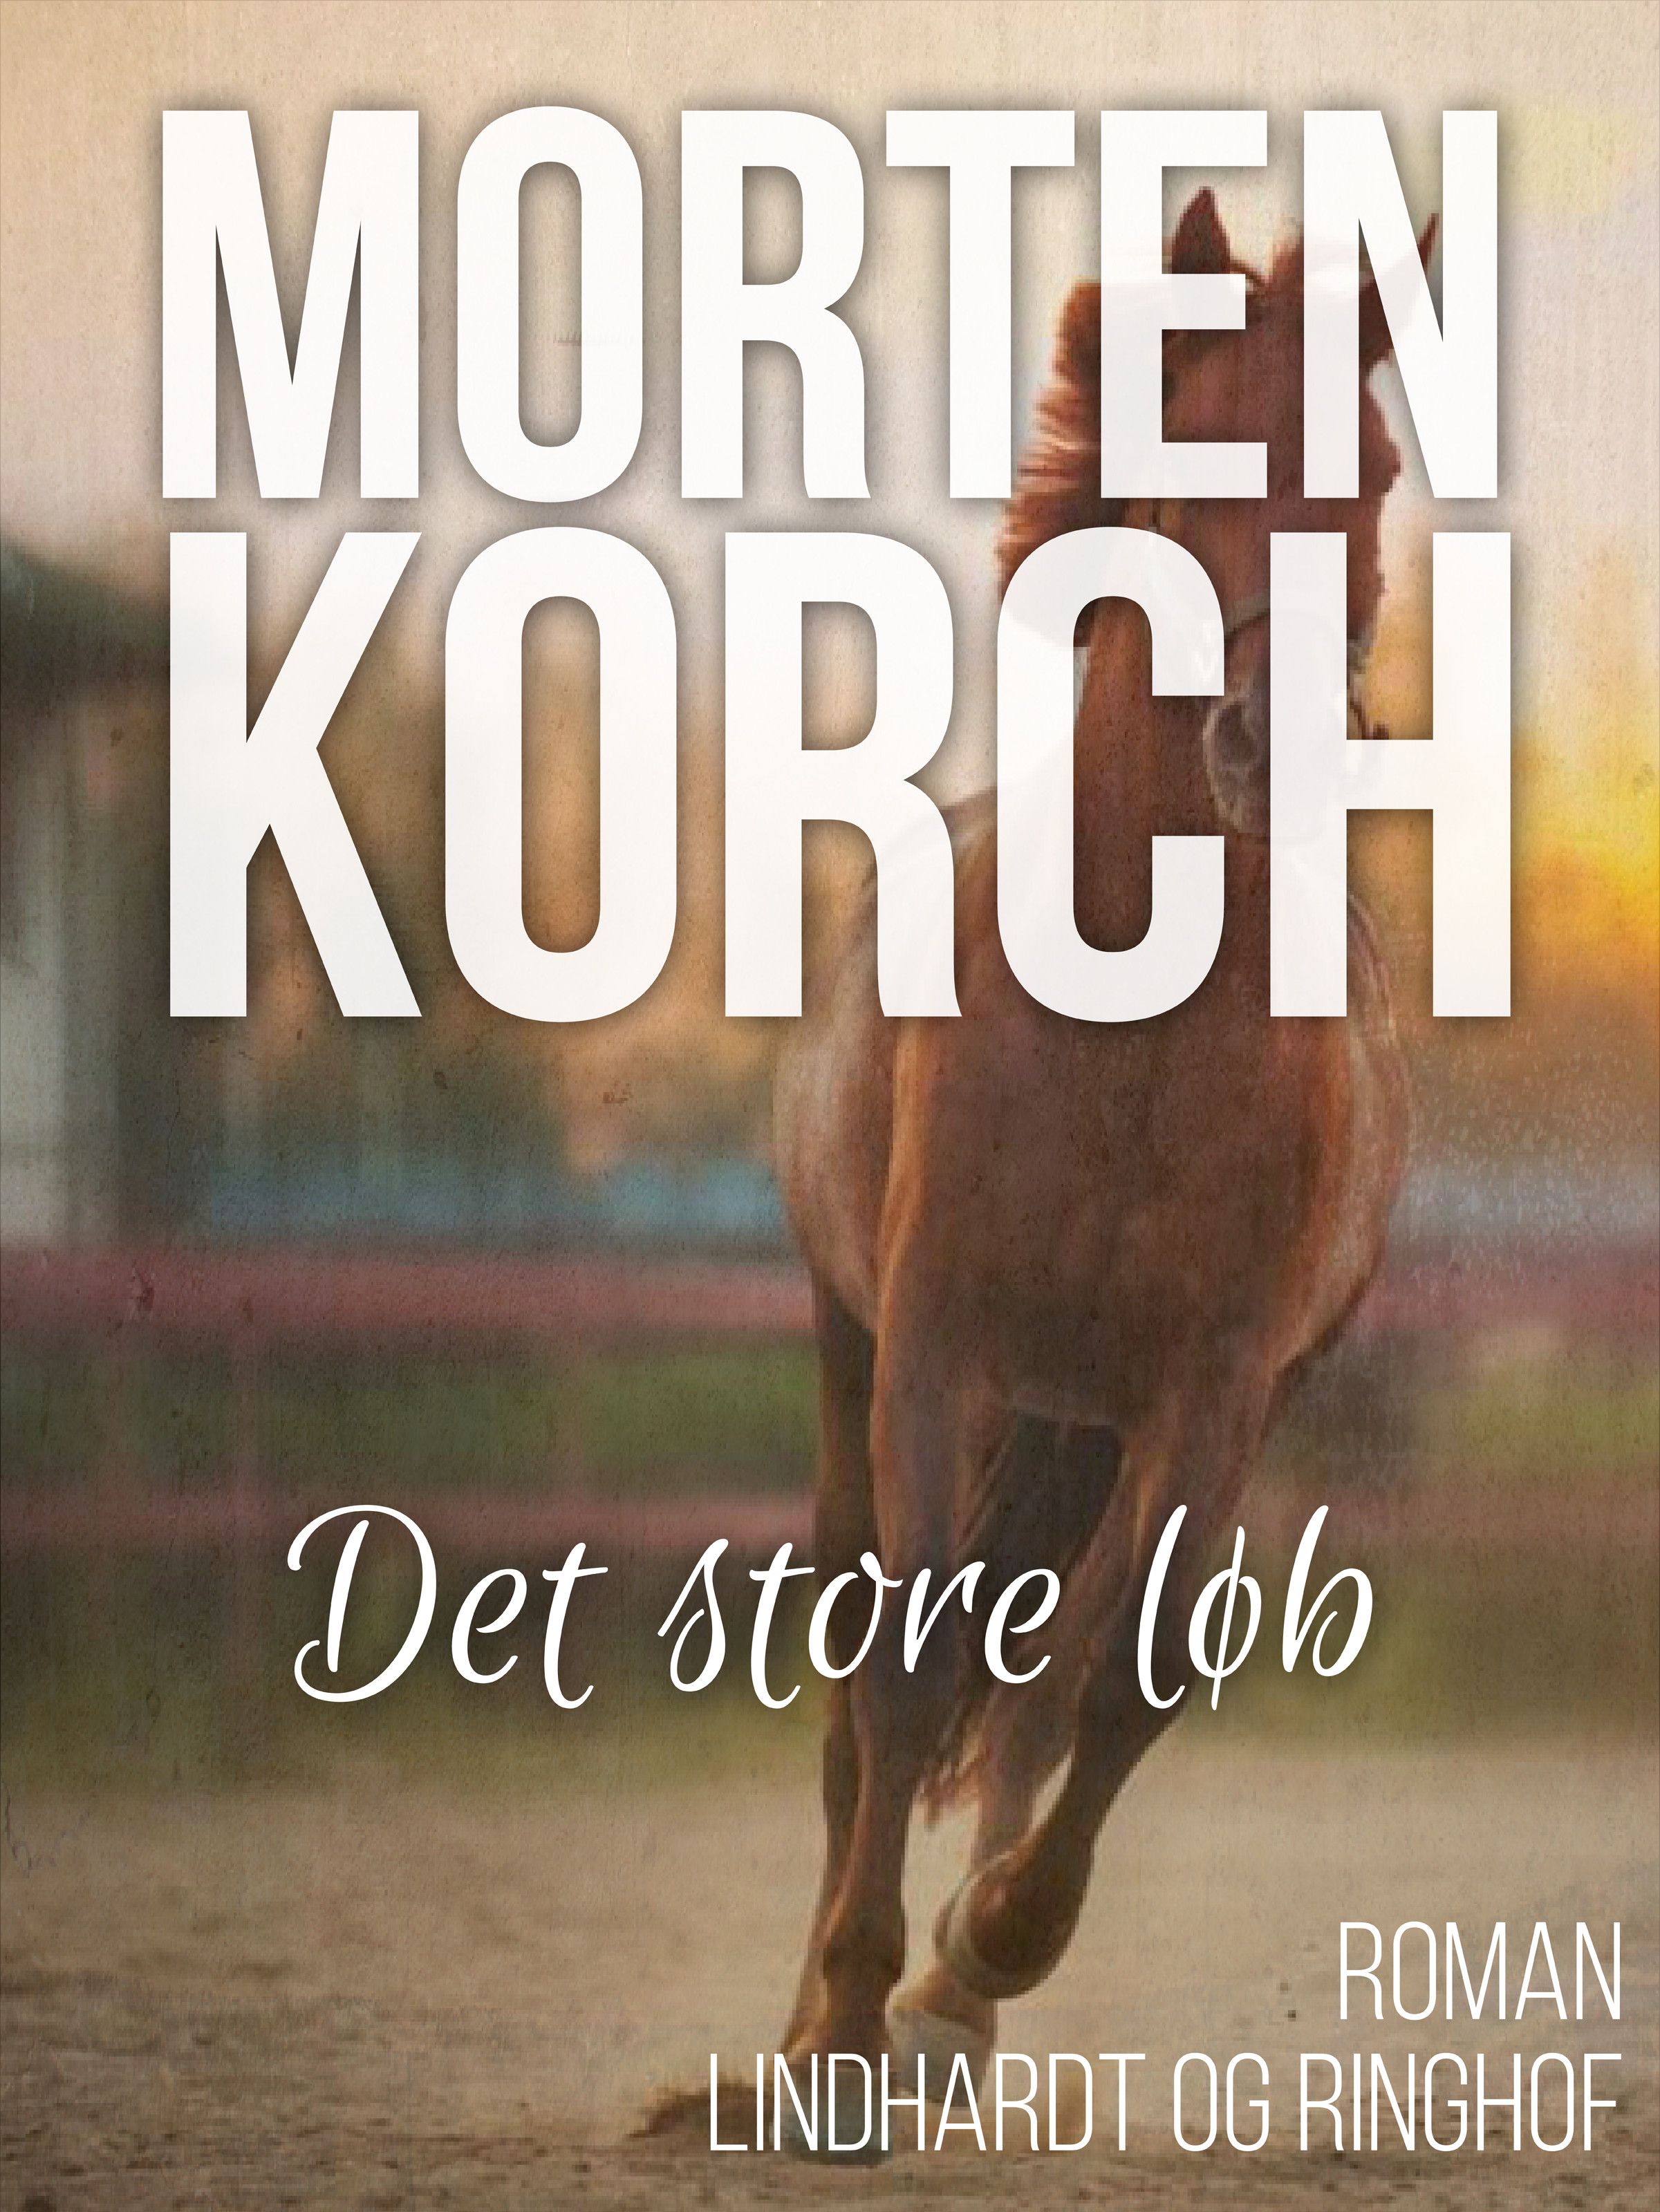 Det store løb, audiobook by Morten Korch